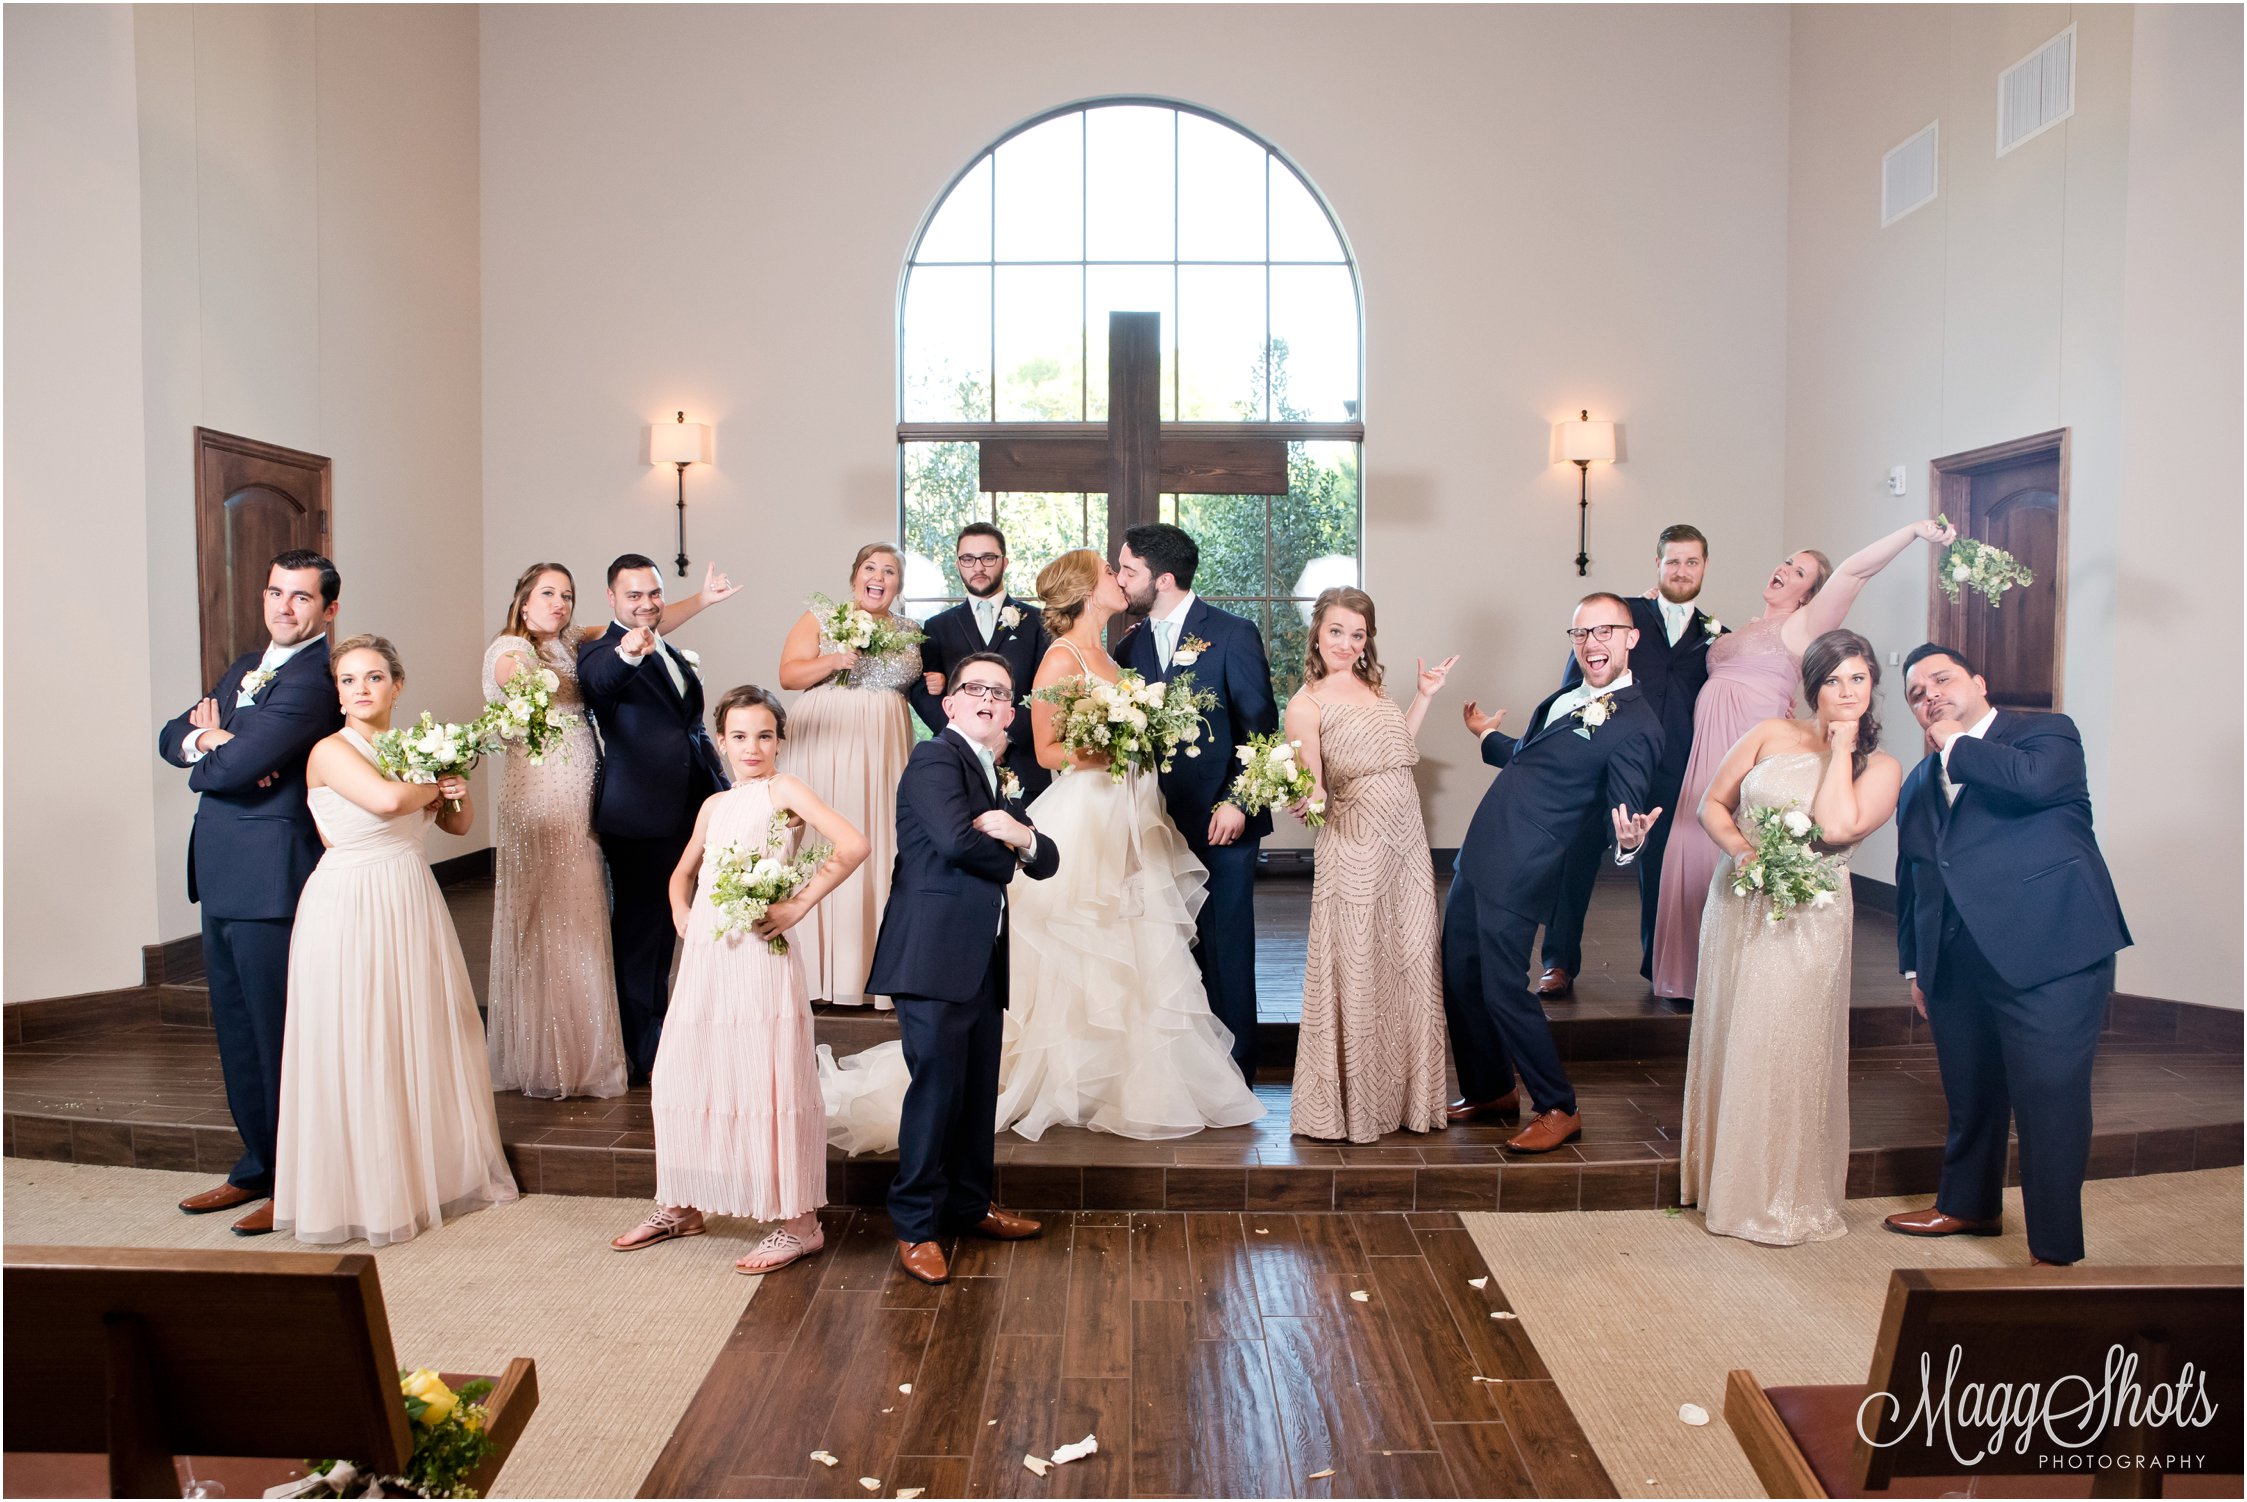 MaggShots Photography, MaggShots, Professional Photographer, Wedding Photographer, Photography, The Laurel Texas, Heather and Jacob Wedding